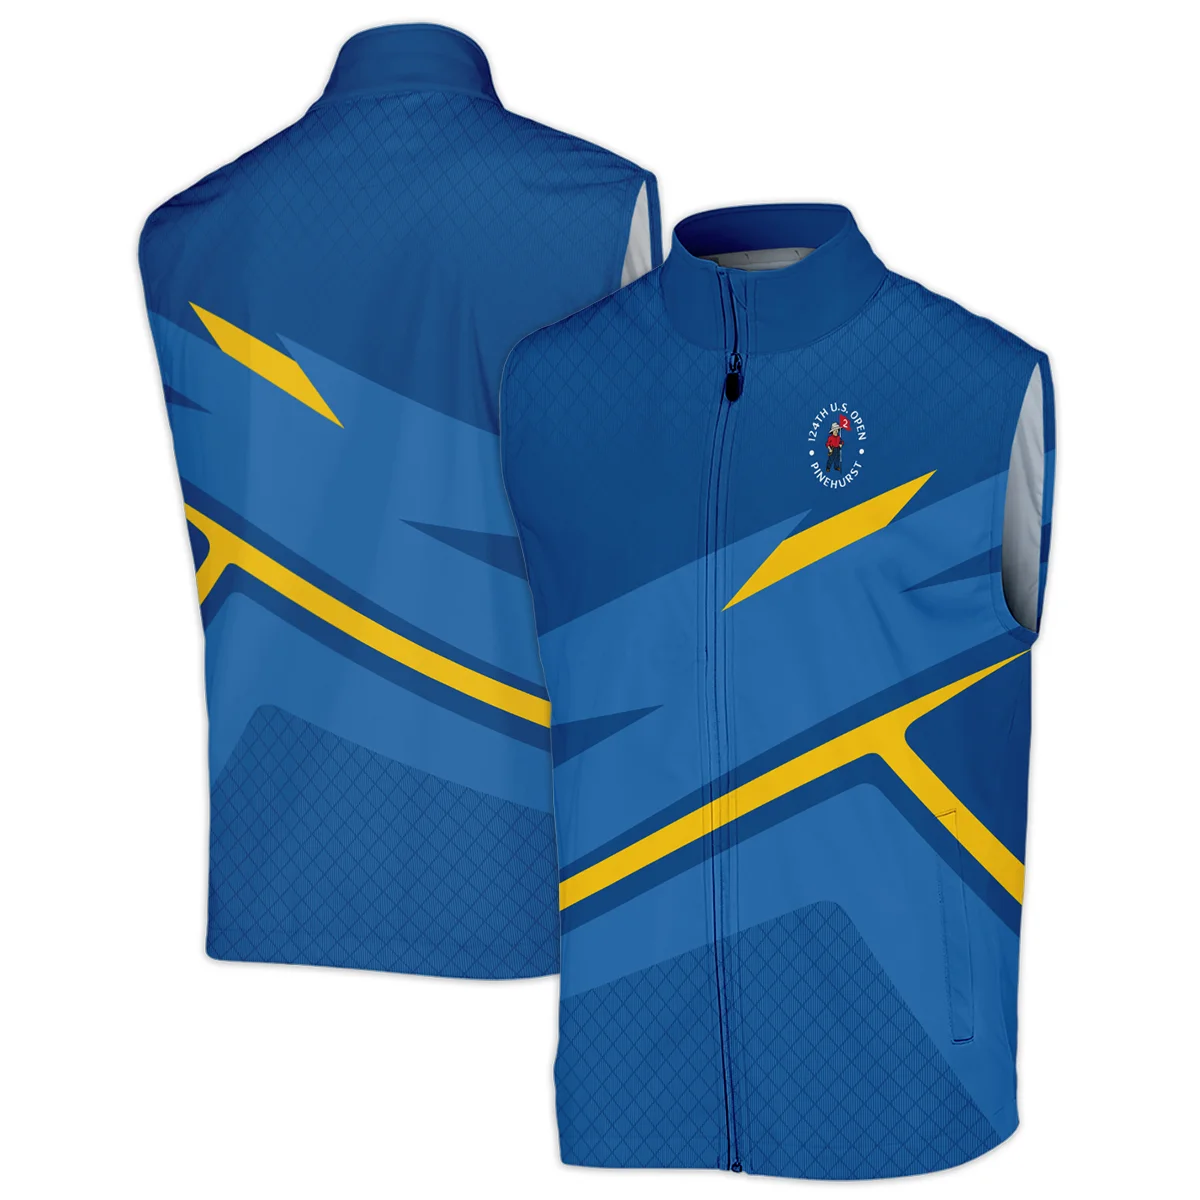 Titleist 124th U.S. Open Pinehurst Blue Yellow Mix Pattern Hoodie Shirt Style Classic